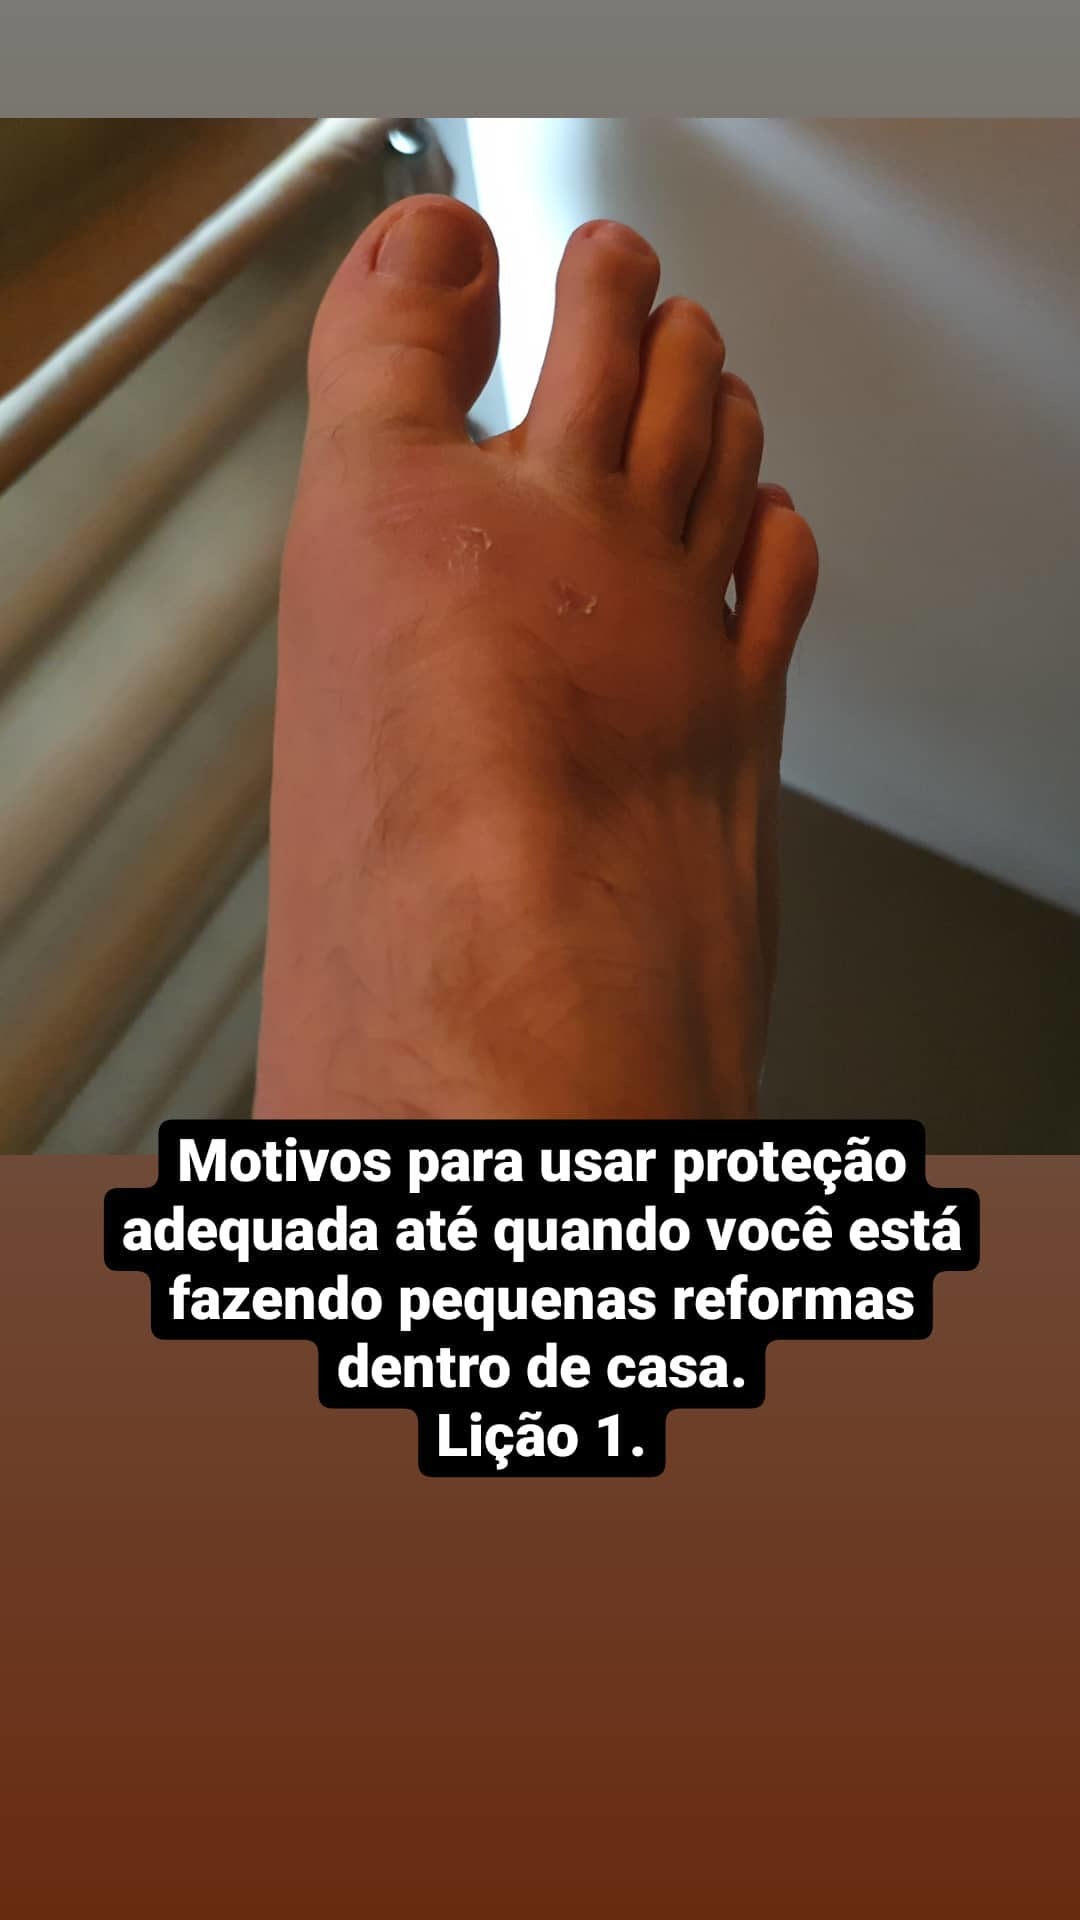 Leon Martins's Feet